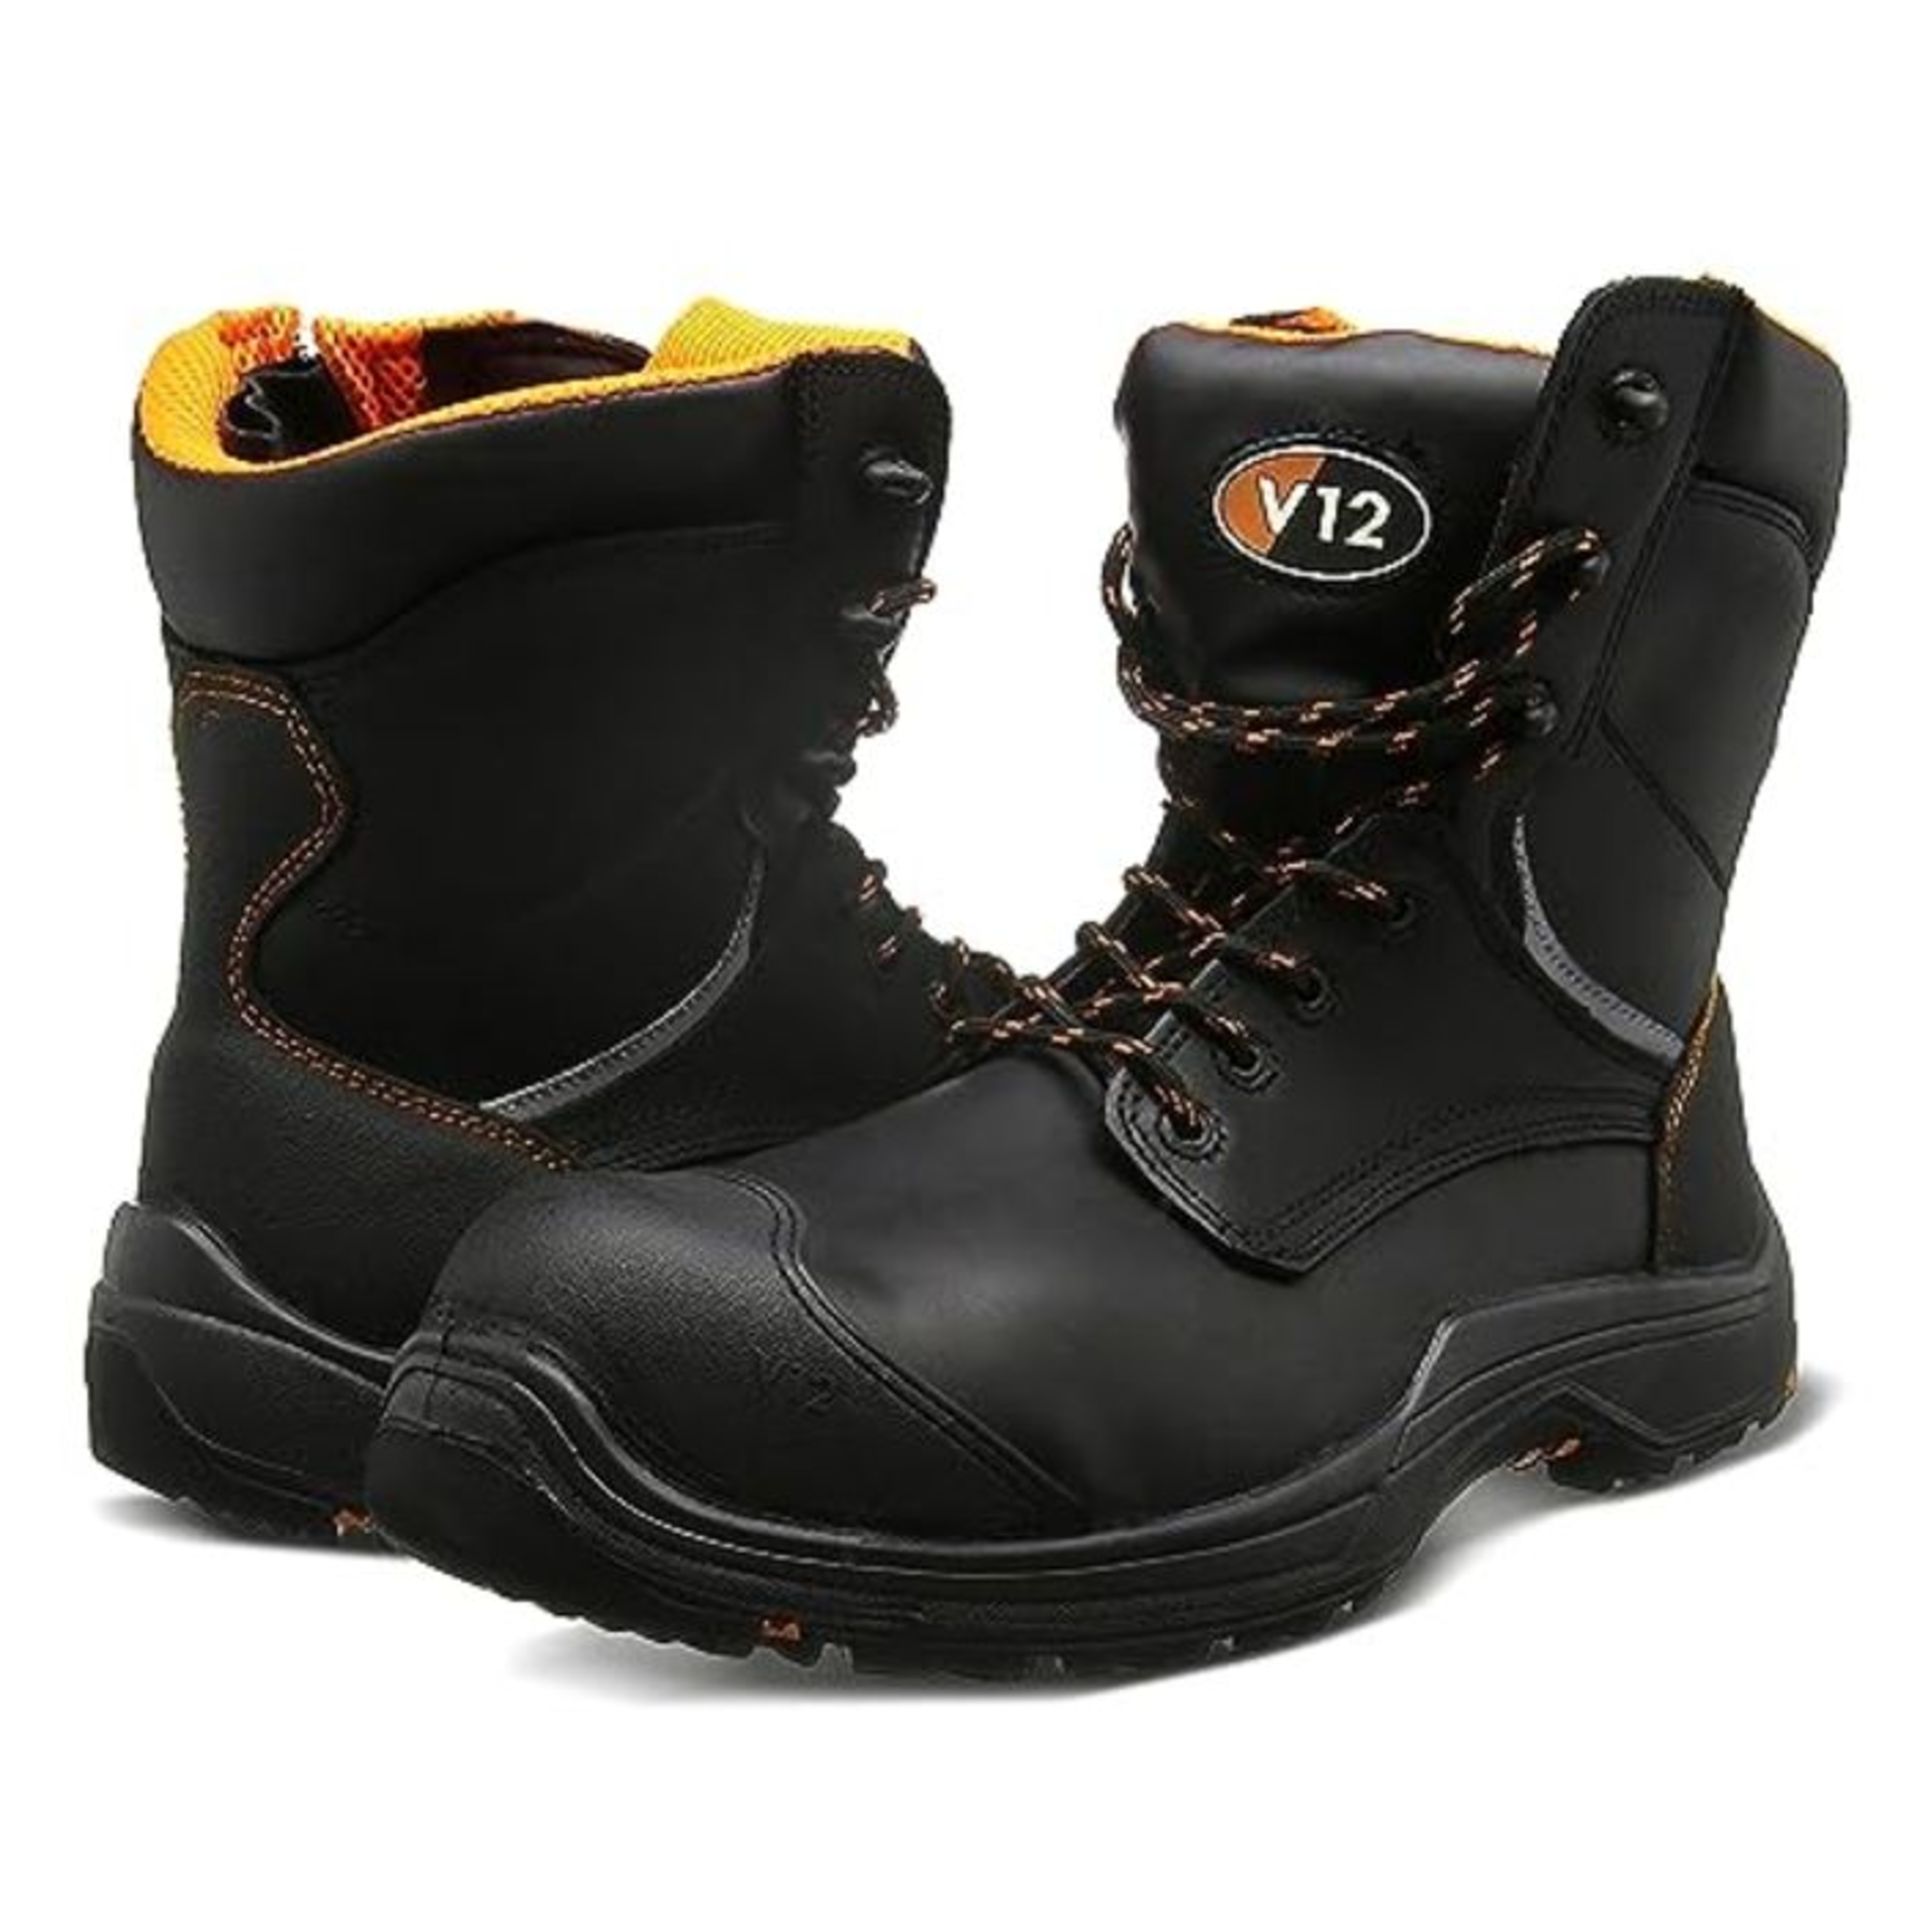 RRP £69.00 V12 VR620.01/05 Avenger IGS Boots, Size 10, Black